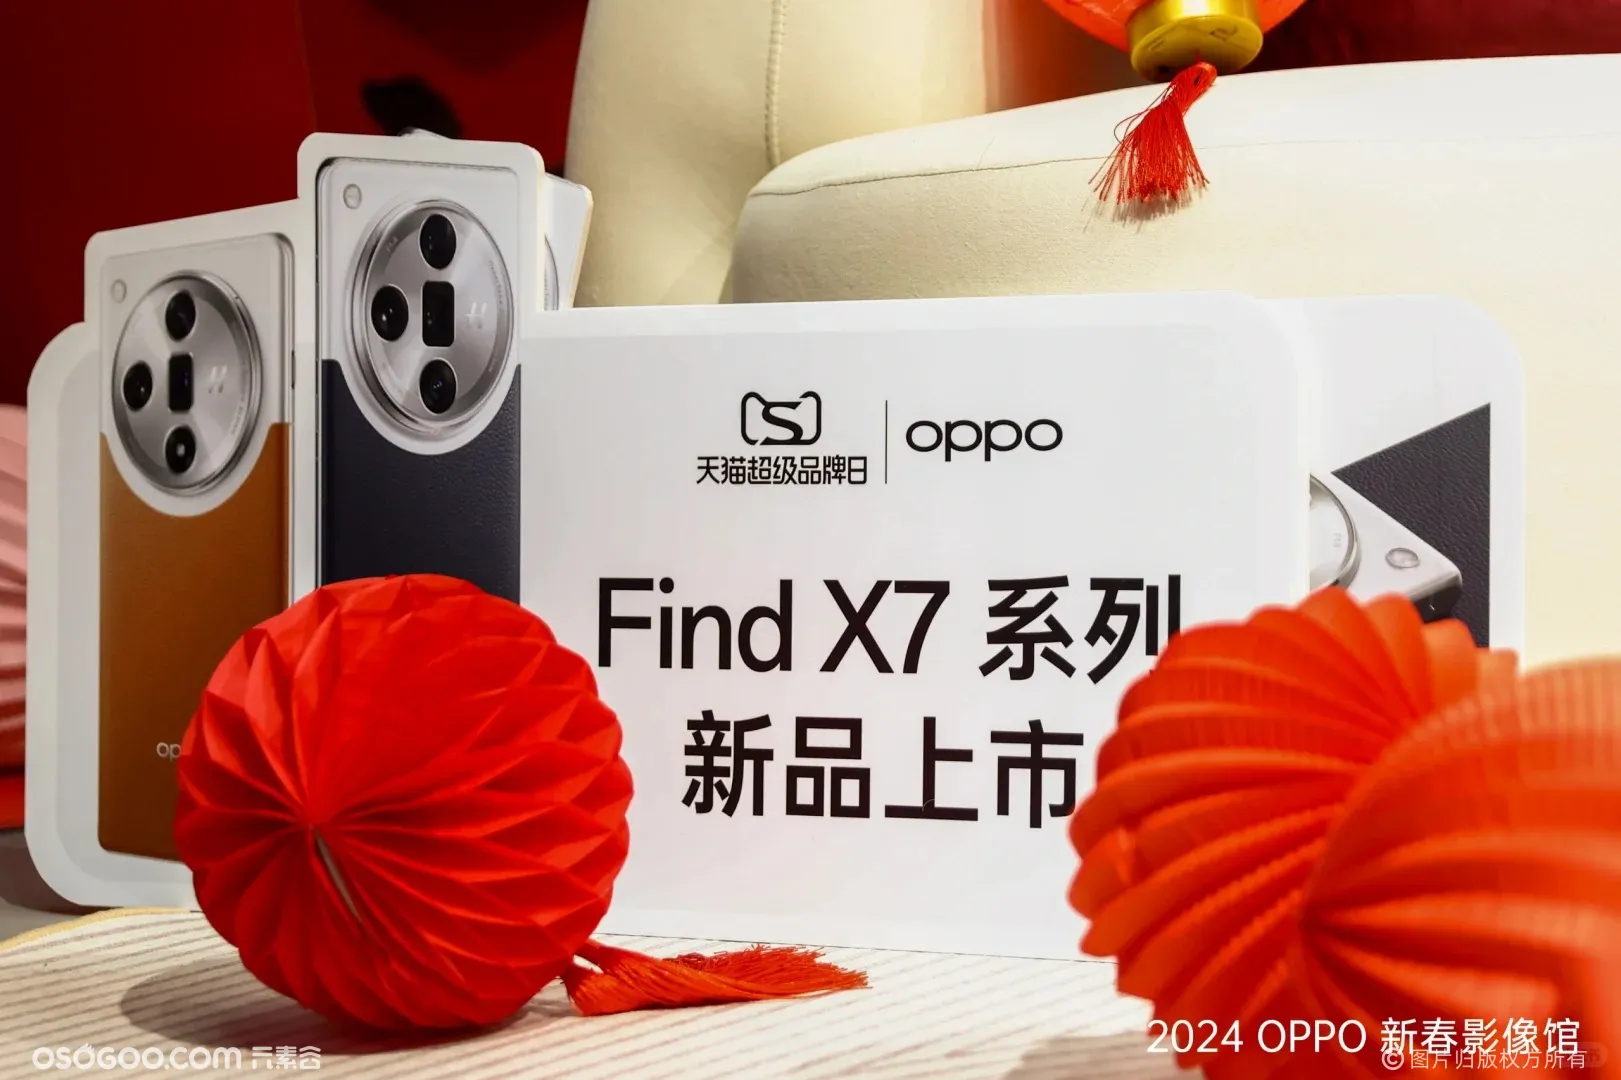 OPPO Find X7 「新春影像馆」限时快闪